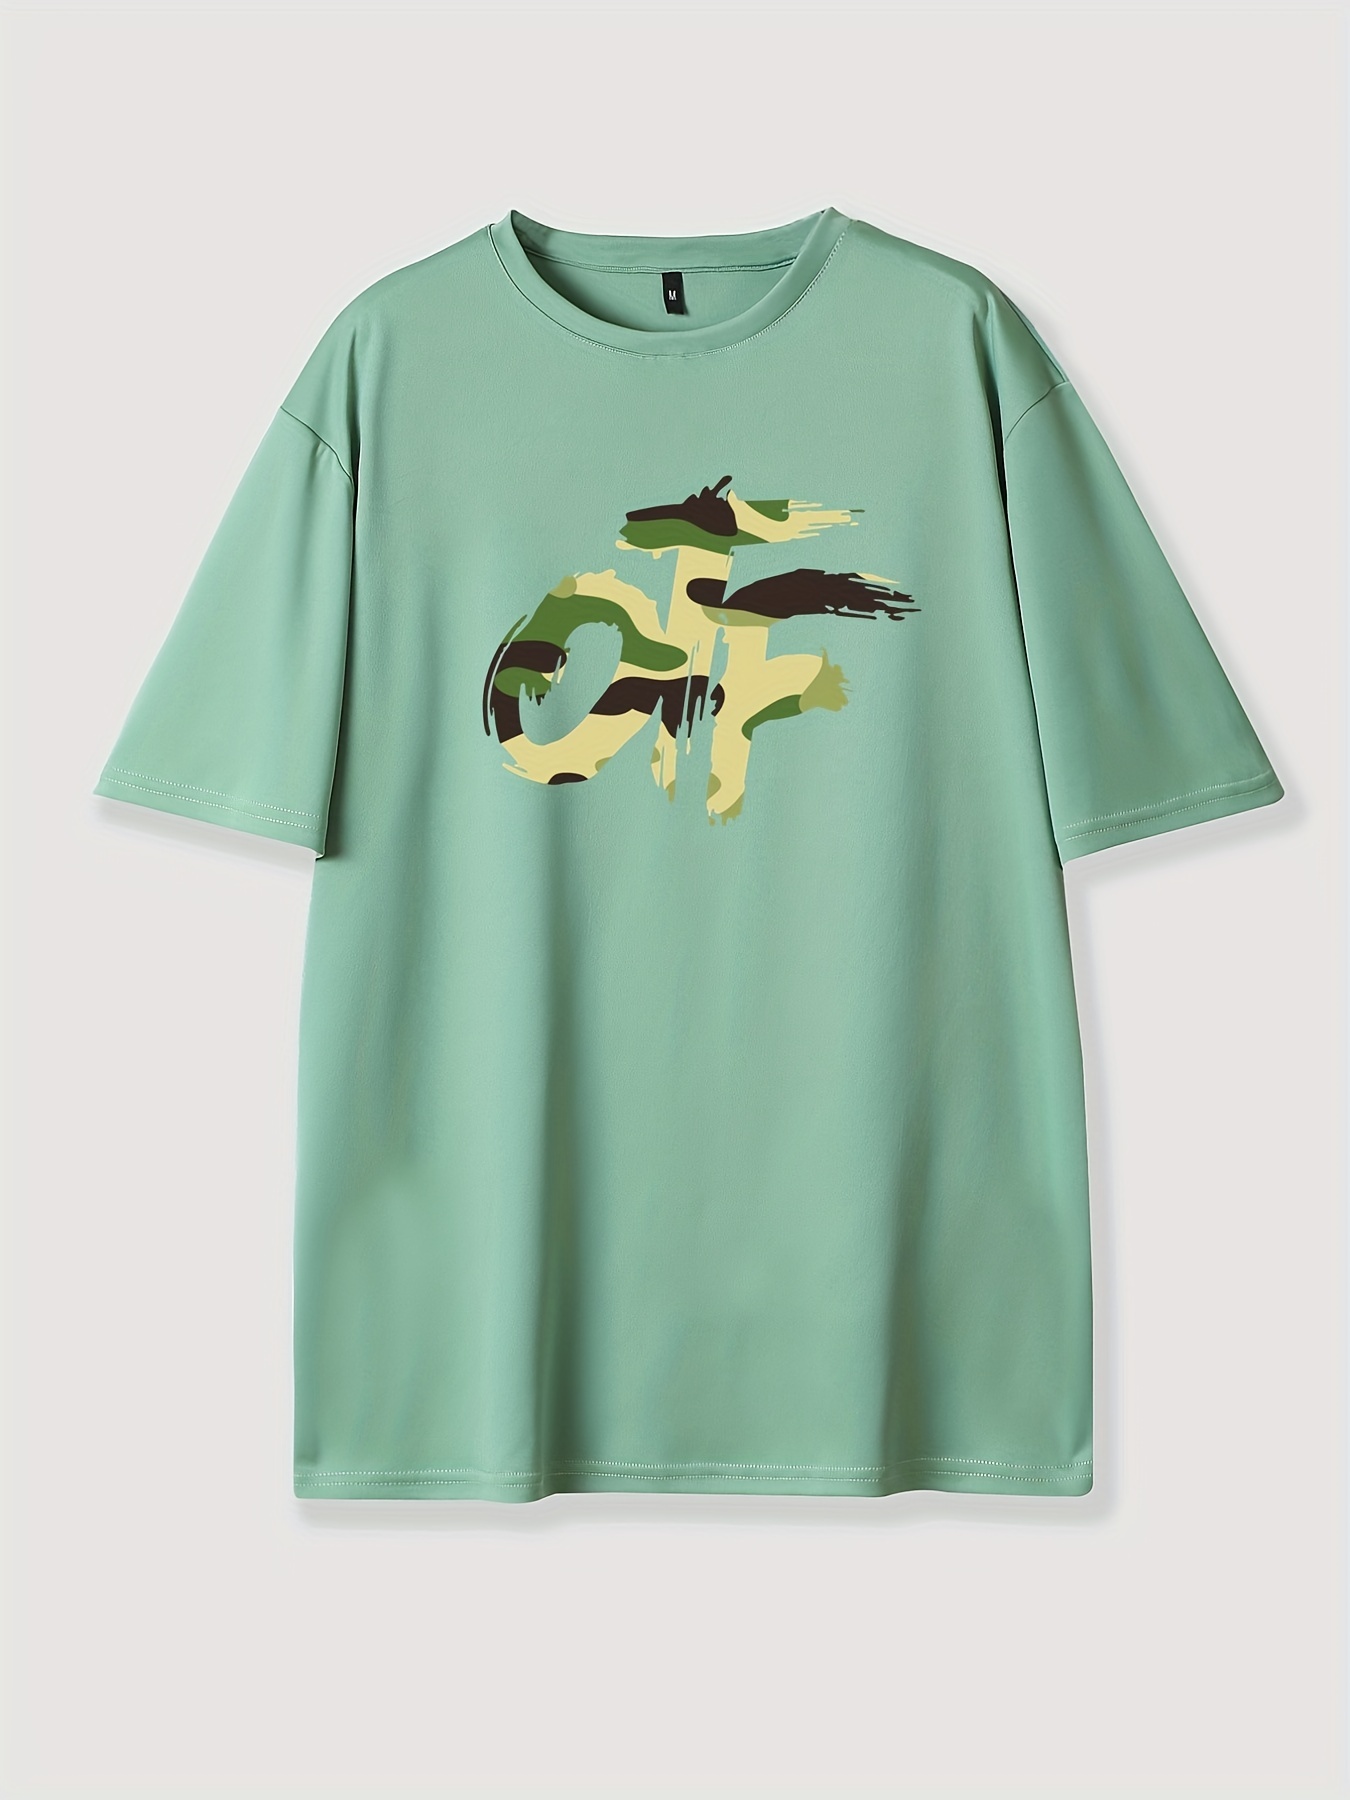 Palm Angels T Shirts NZ Online Store - Kids Crocodile T Shirt Blue Green